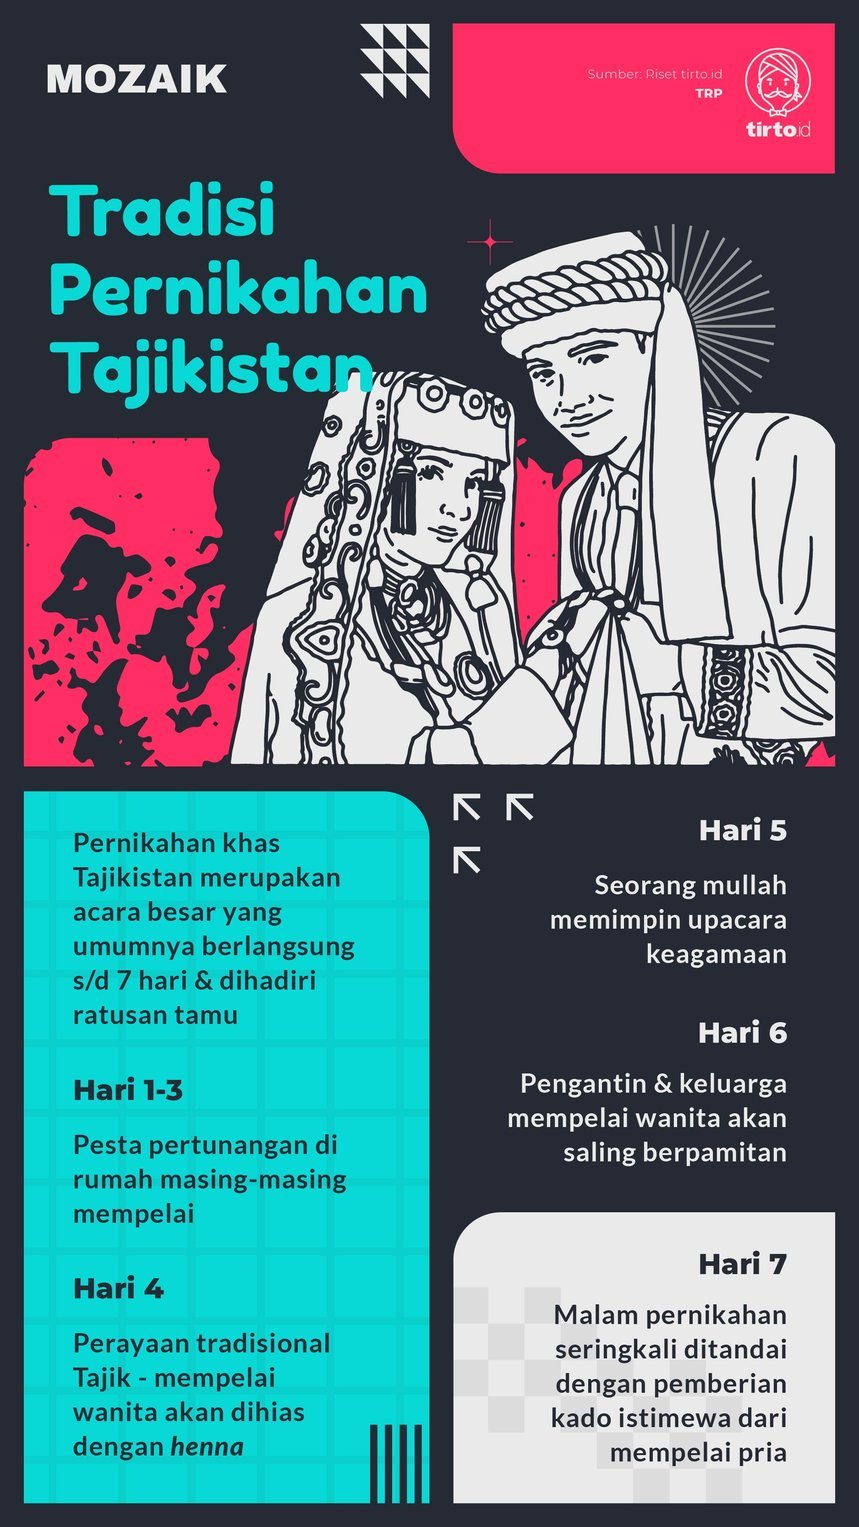 Infografik Mozaik Tradisi Pernikahan Tajikistan